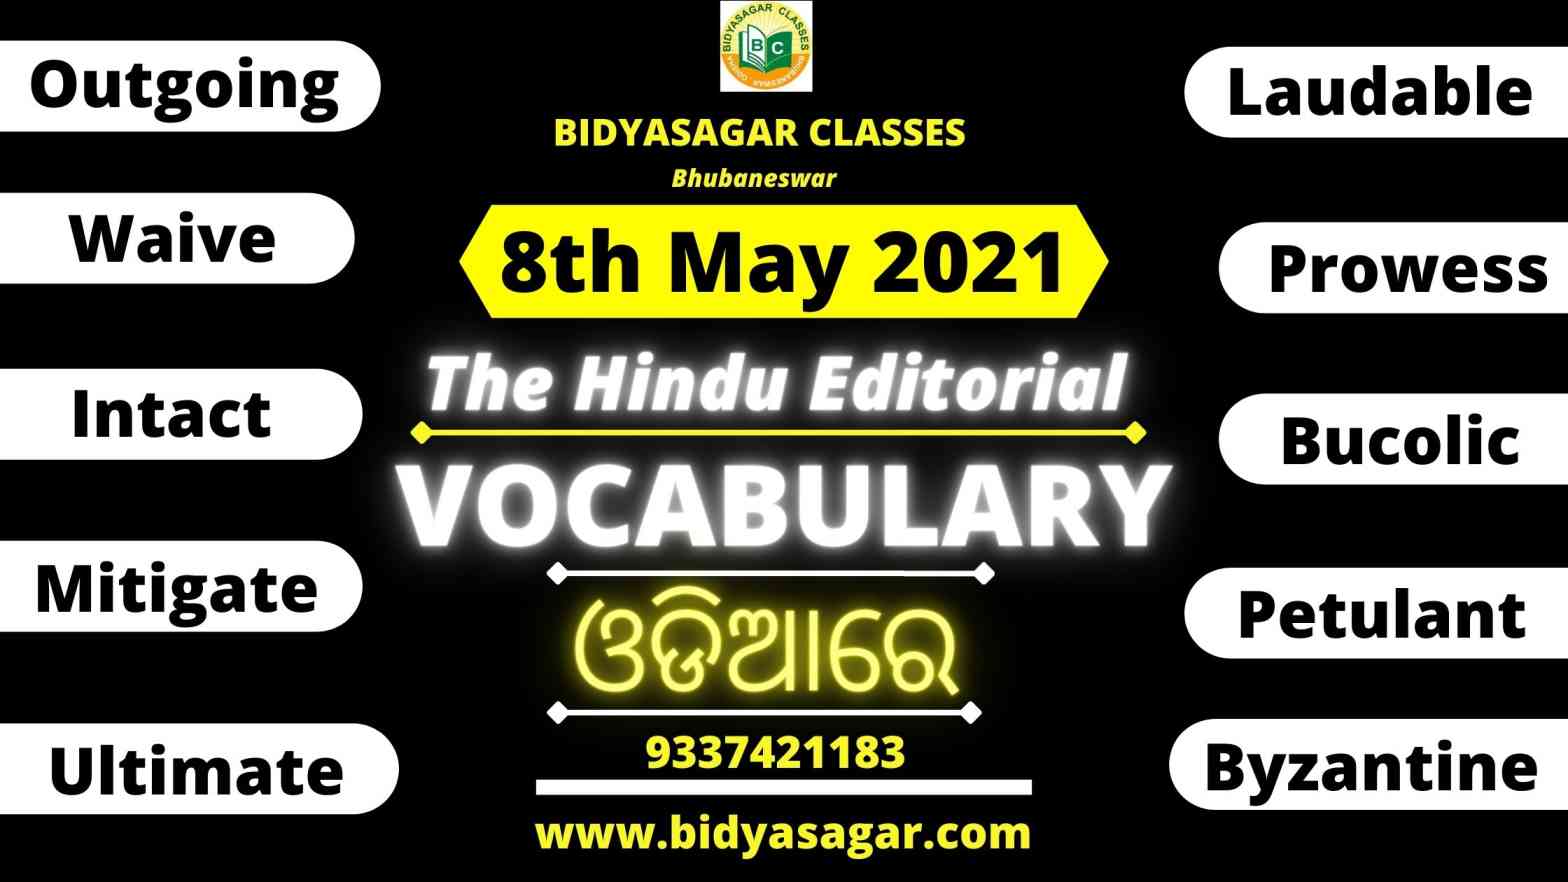 The Hindu Editorial Vocabulary of 8th May 2021